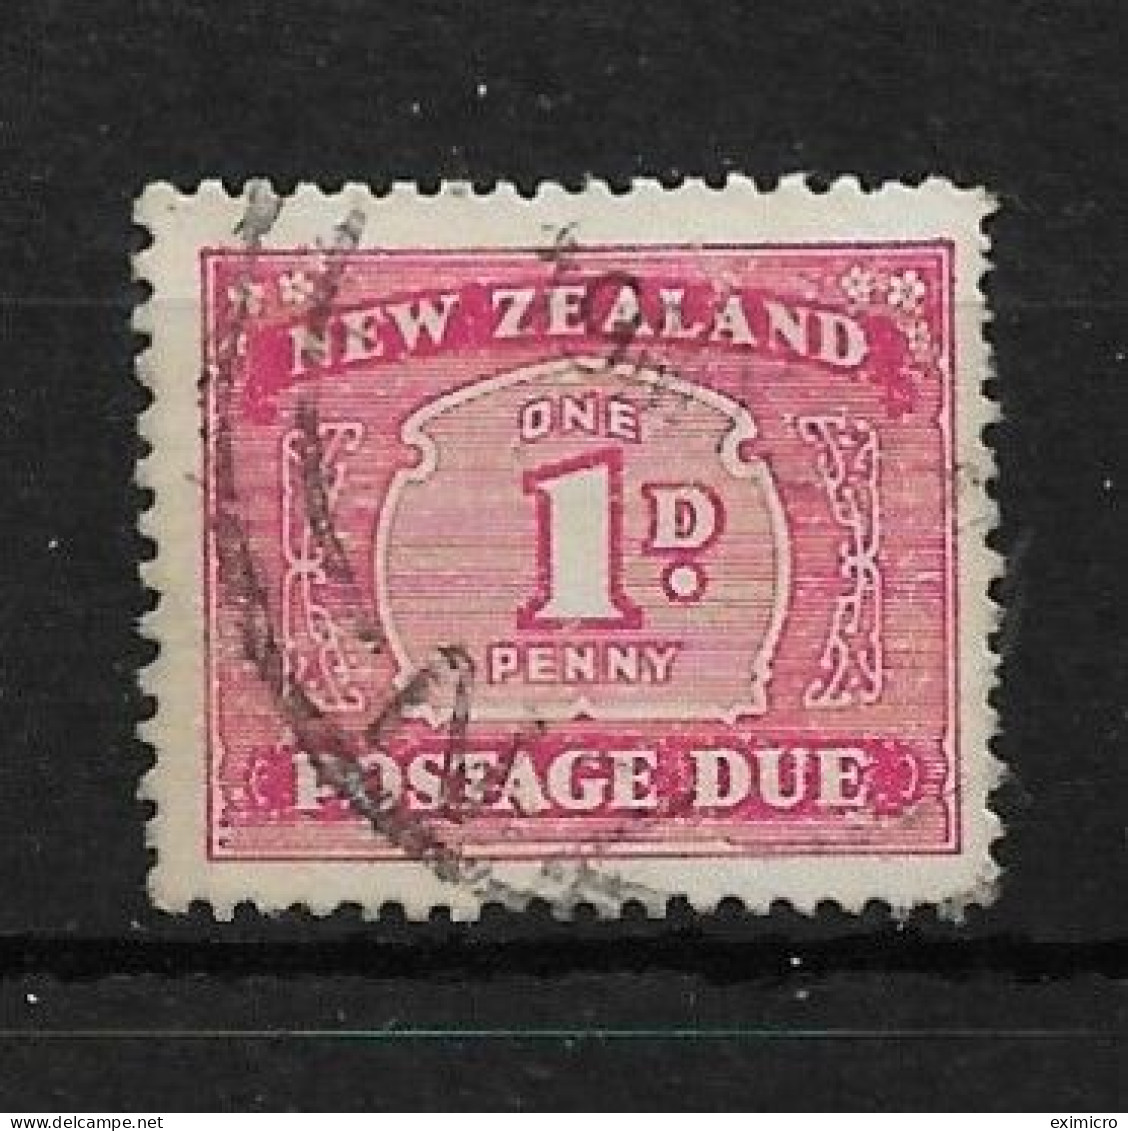 NEW ZEALAND 1939 1d POSTAGE DUE SG D42 FINE USED Cat £2.50 - Strafport